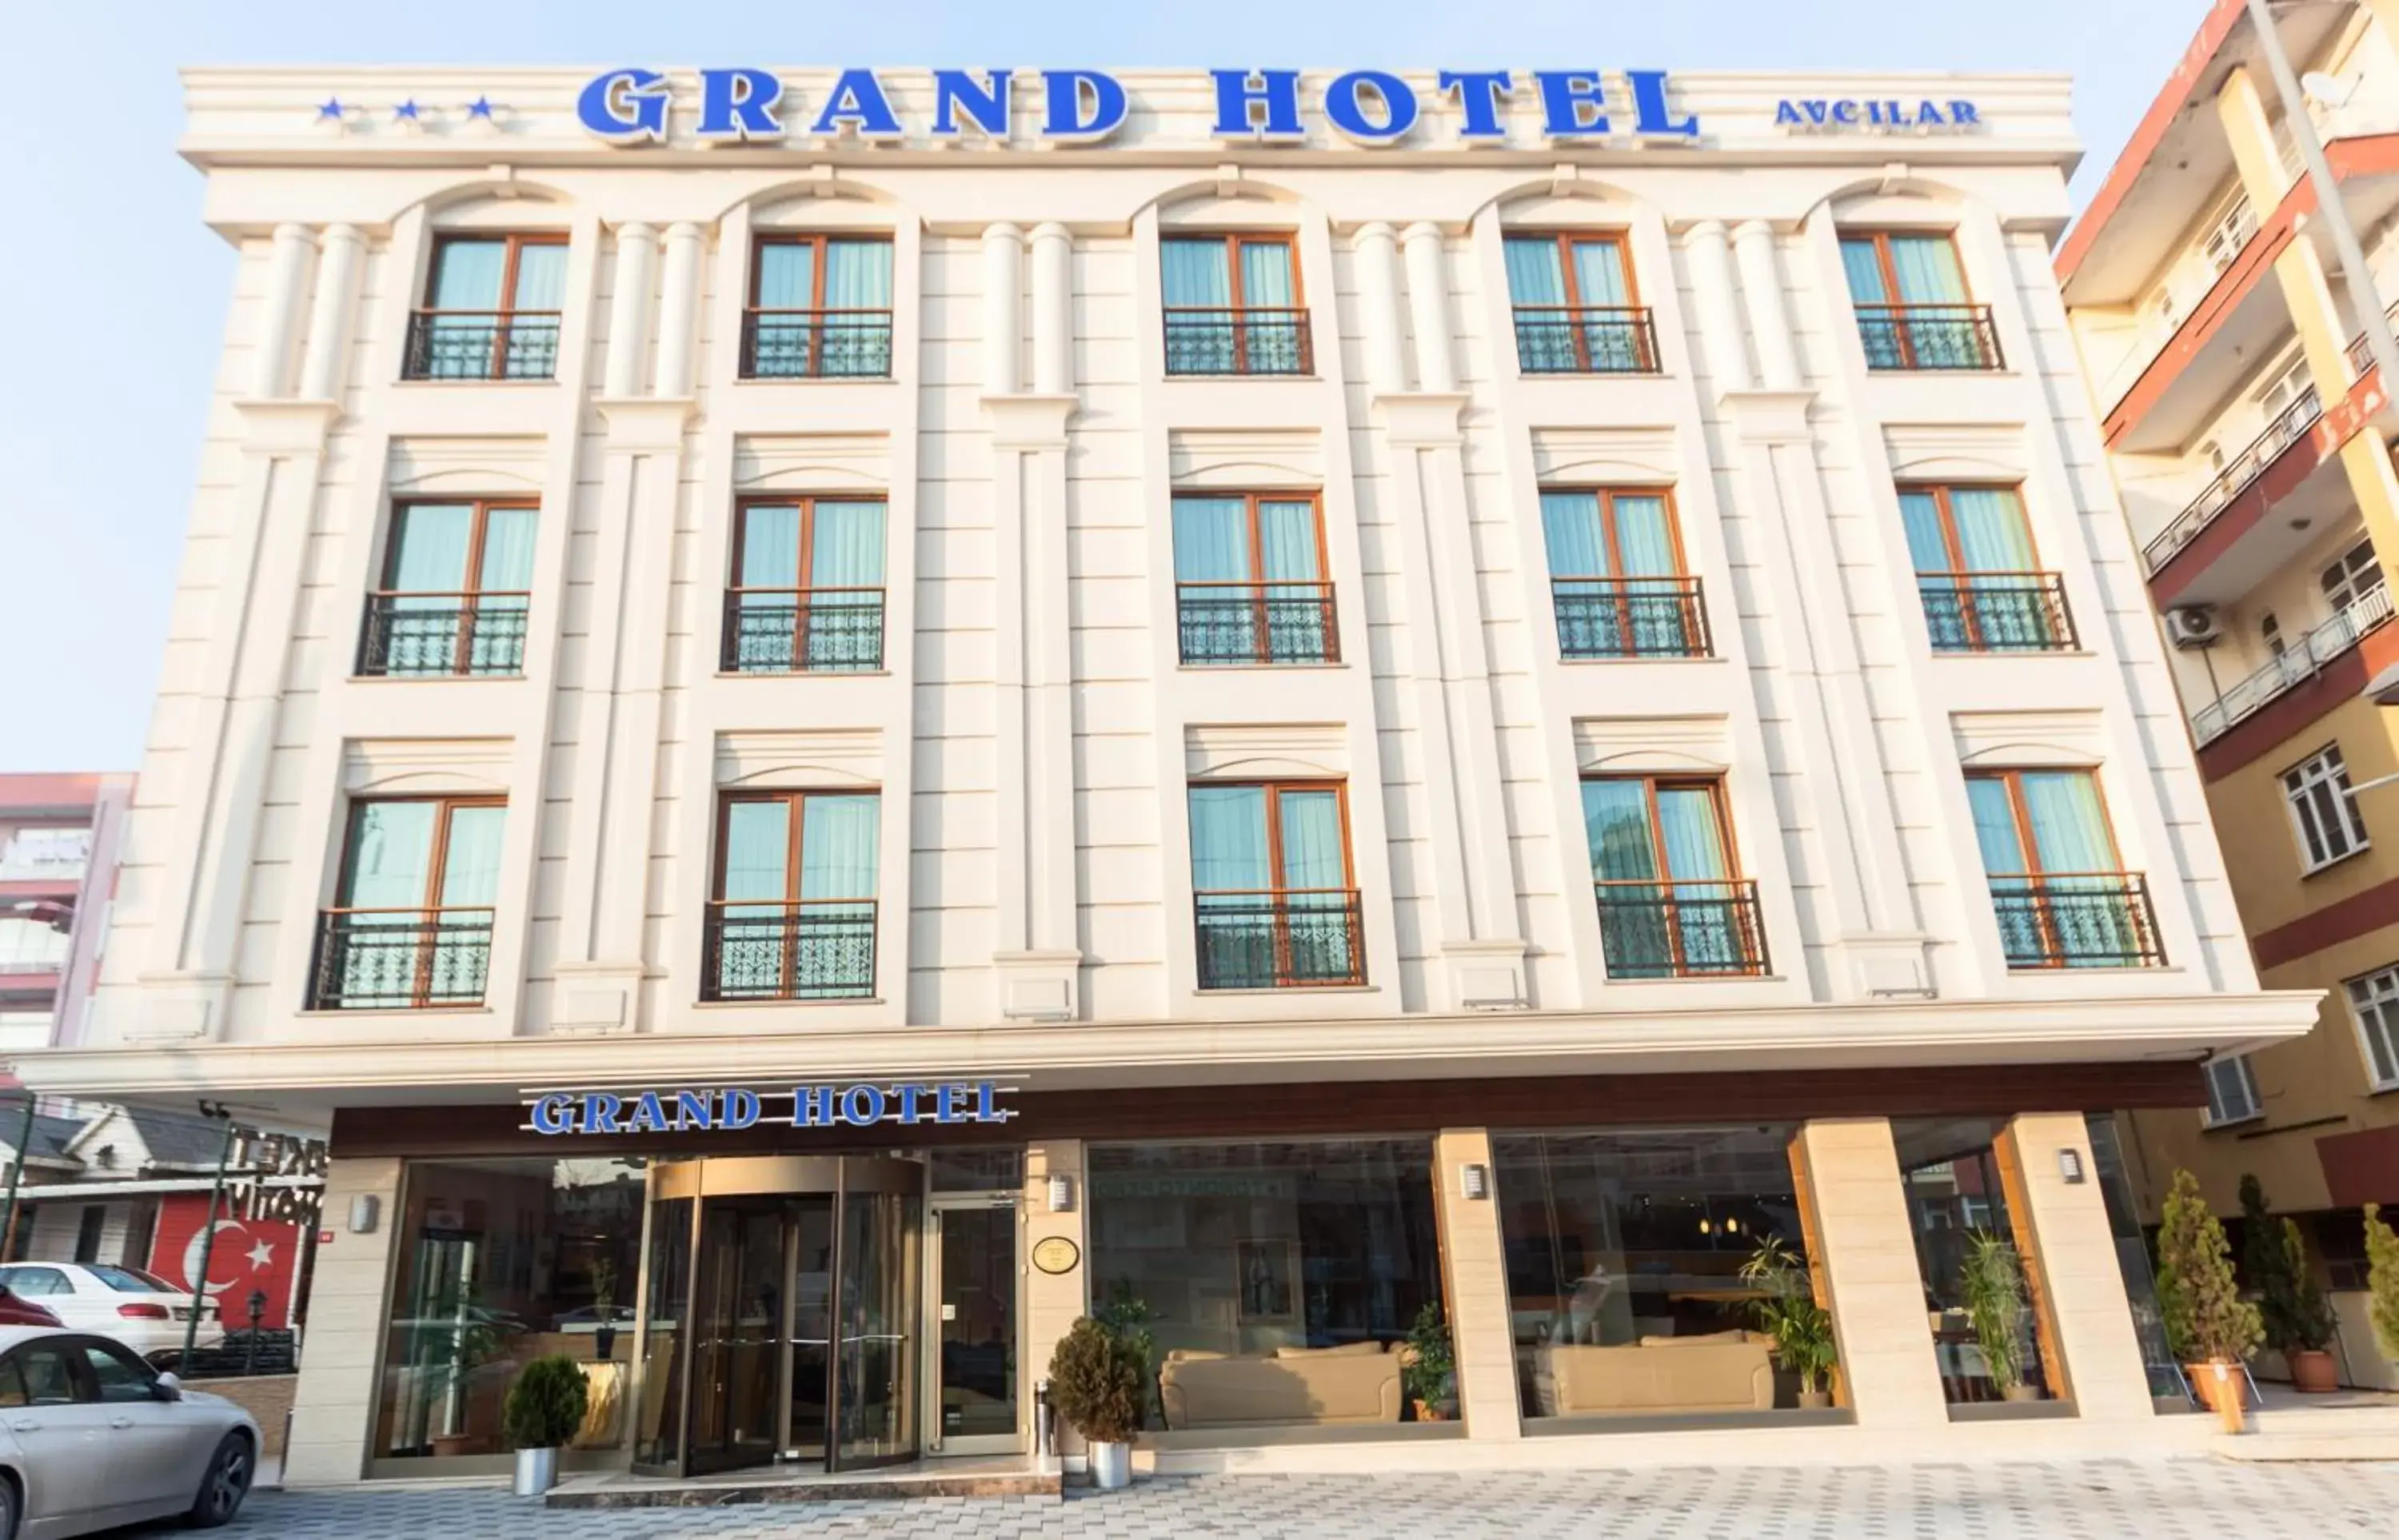 Property building in Grand Hotel Avcilar